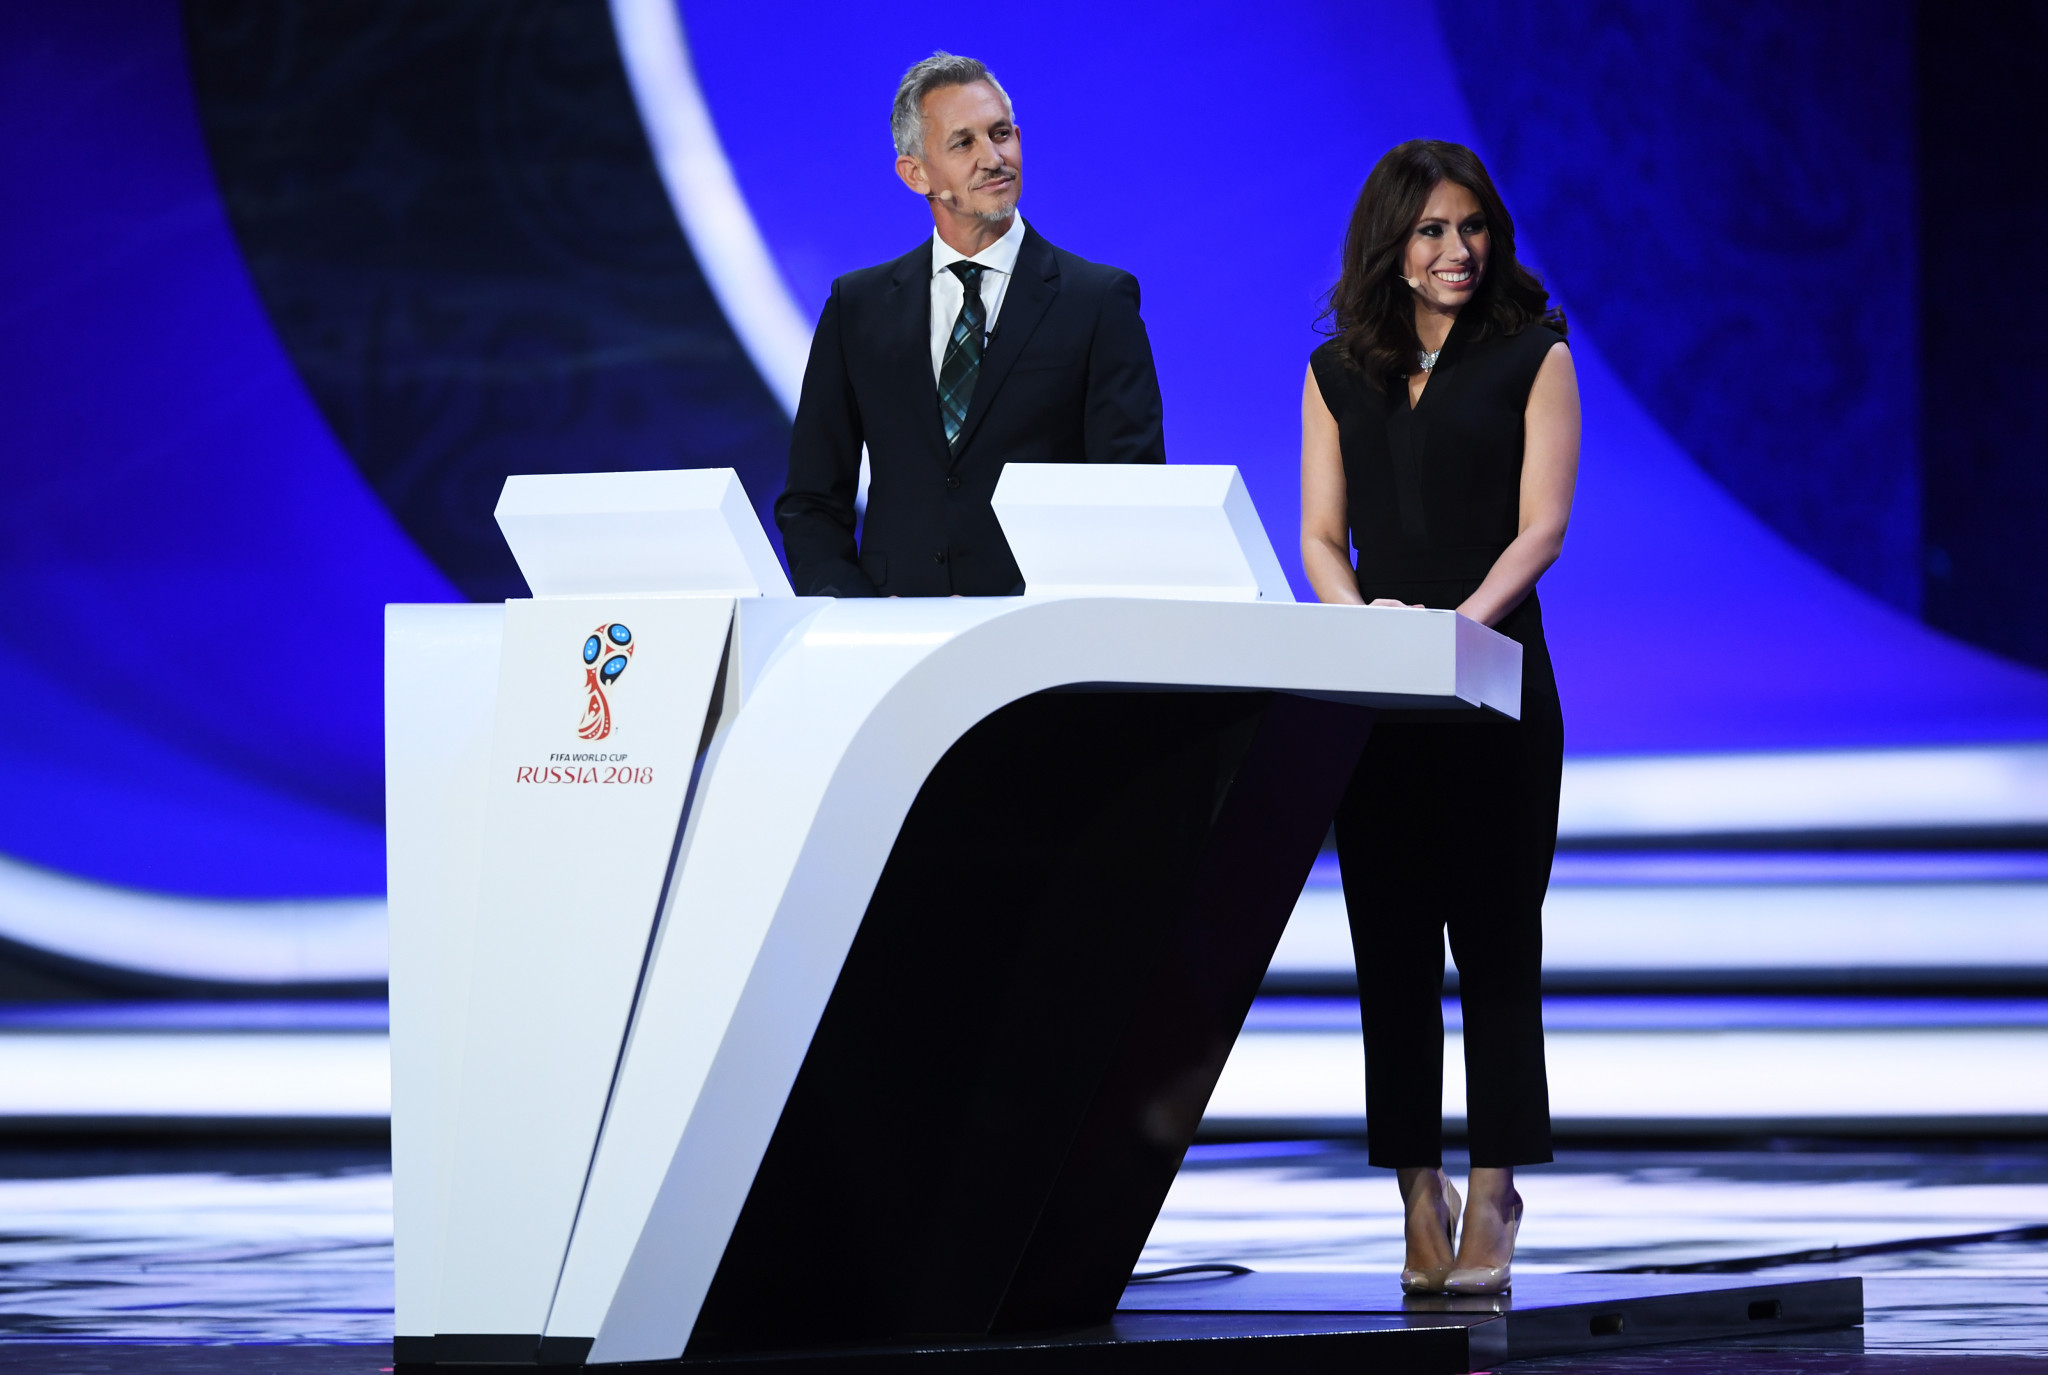 Staunch FIFA critic and former England international Gary Lineker presented the draw alongside Russian journalist Maria Komandnaya  ©Getty Images